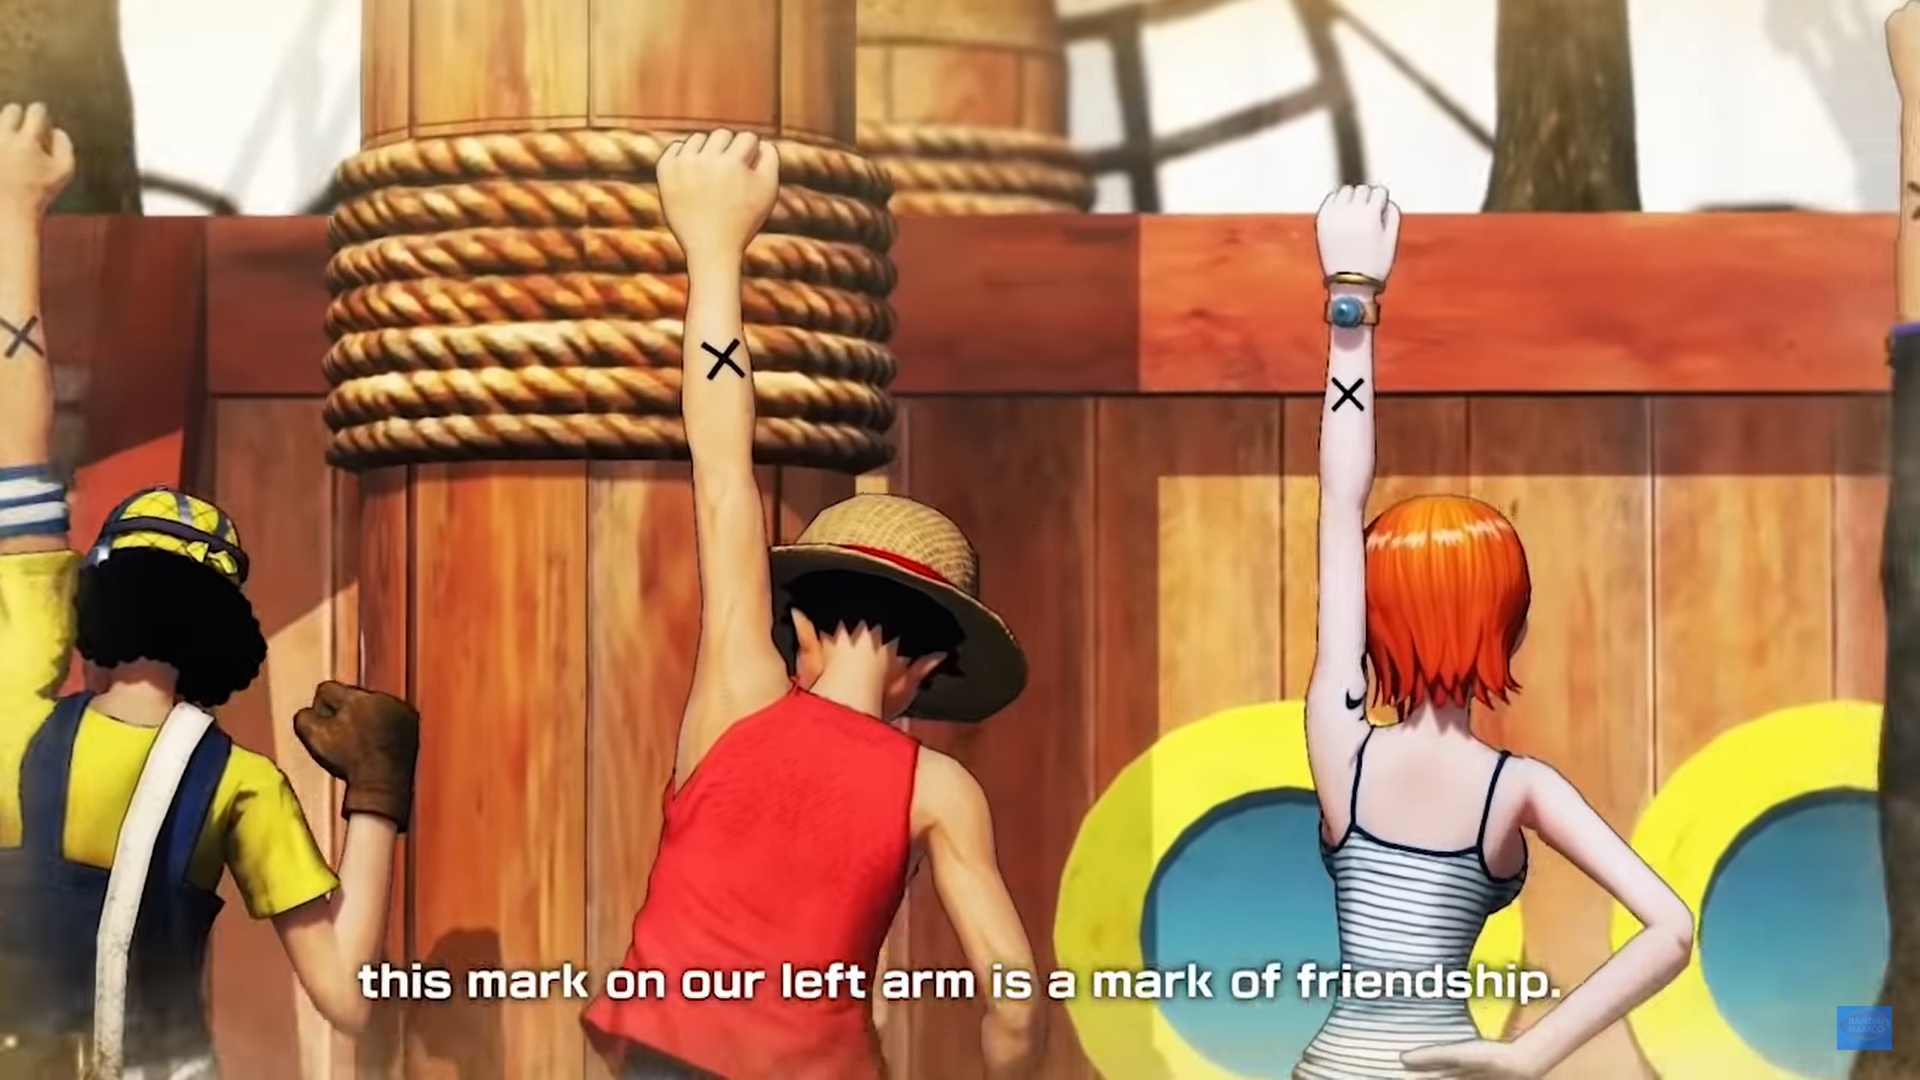 One Piece X Left forearm